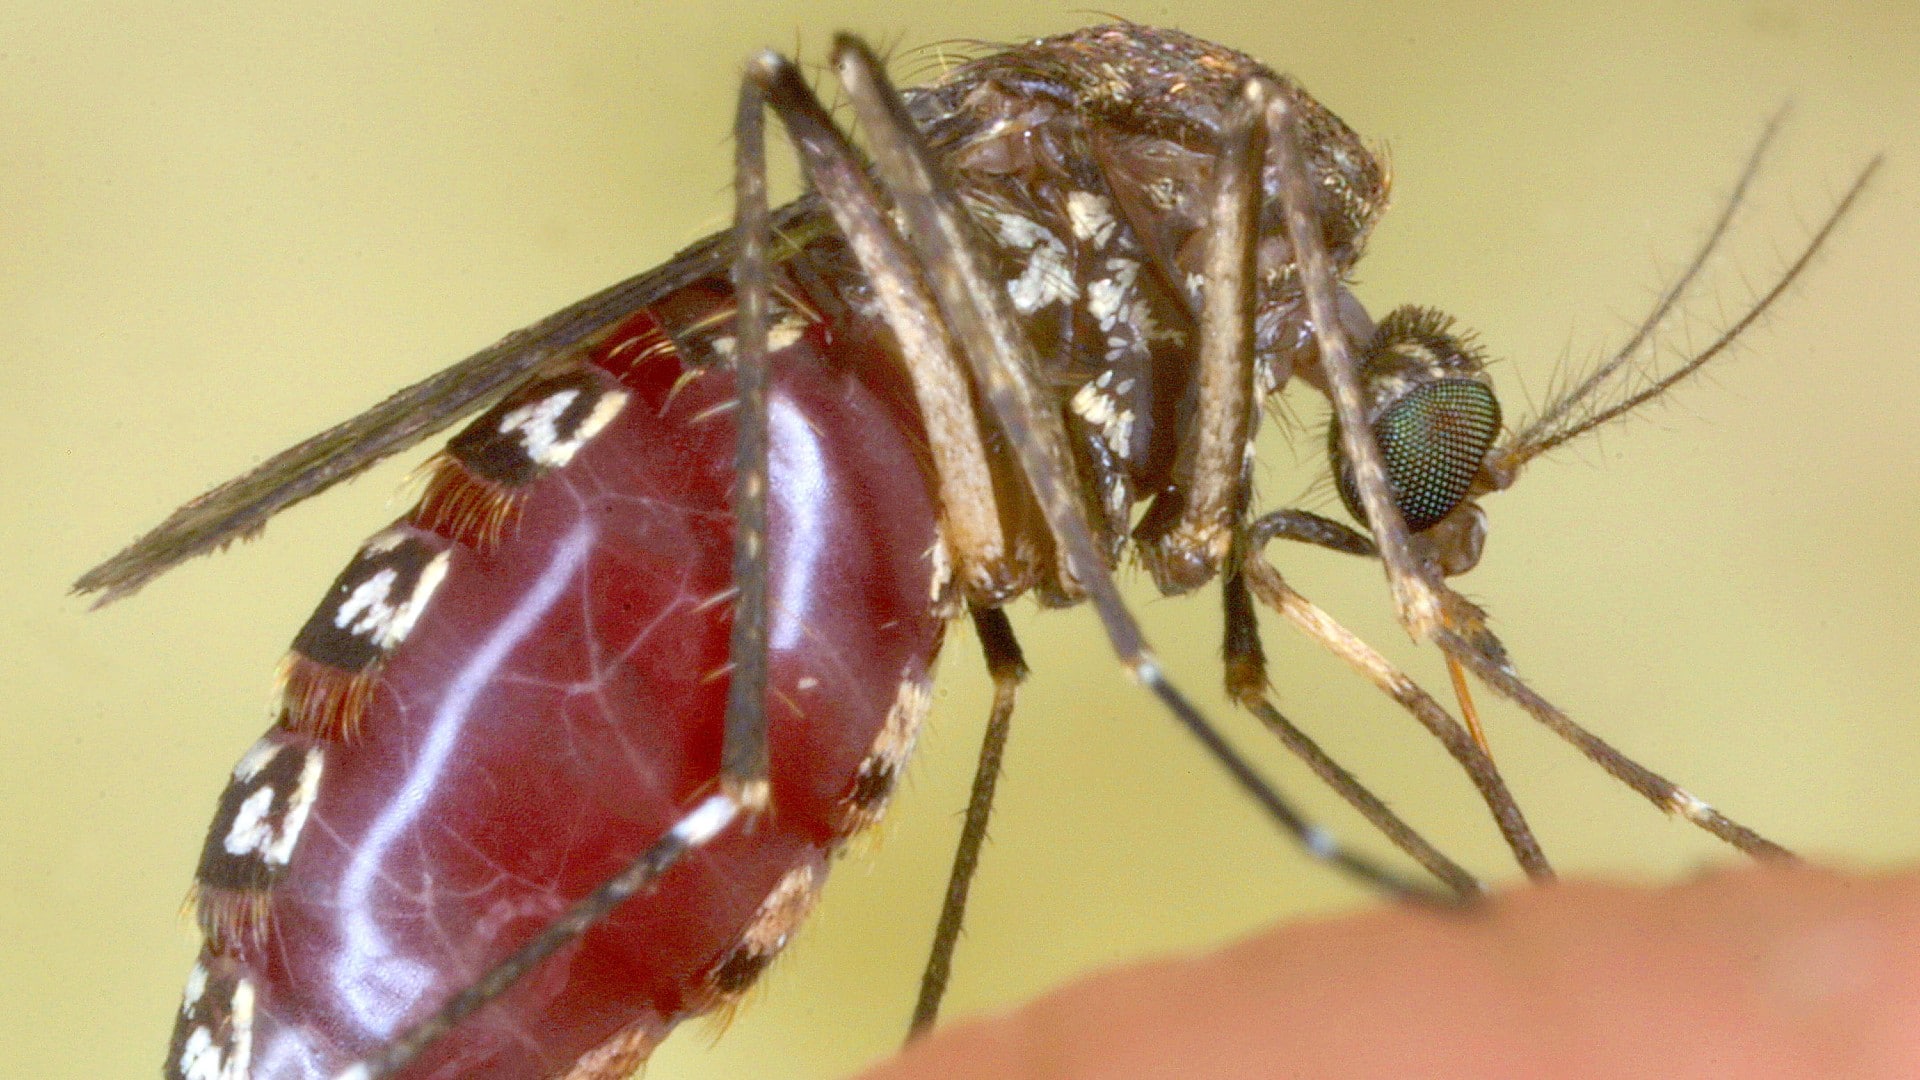 Plaga de mosquitos invade Campeche tras las lluvias